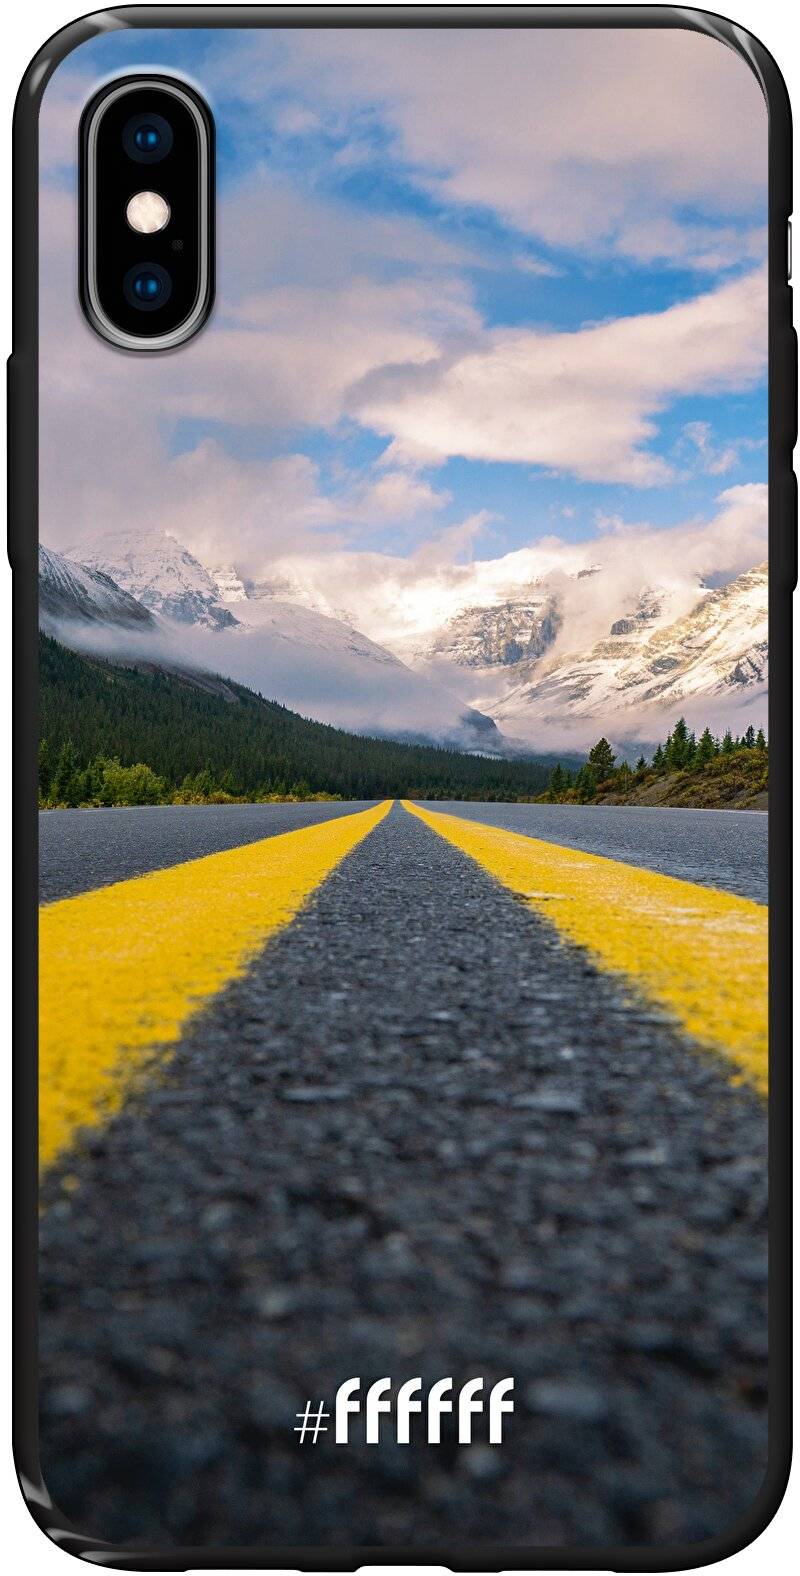 Road Ahead iPhone X